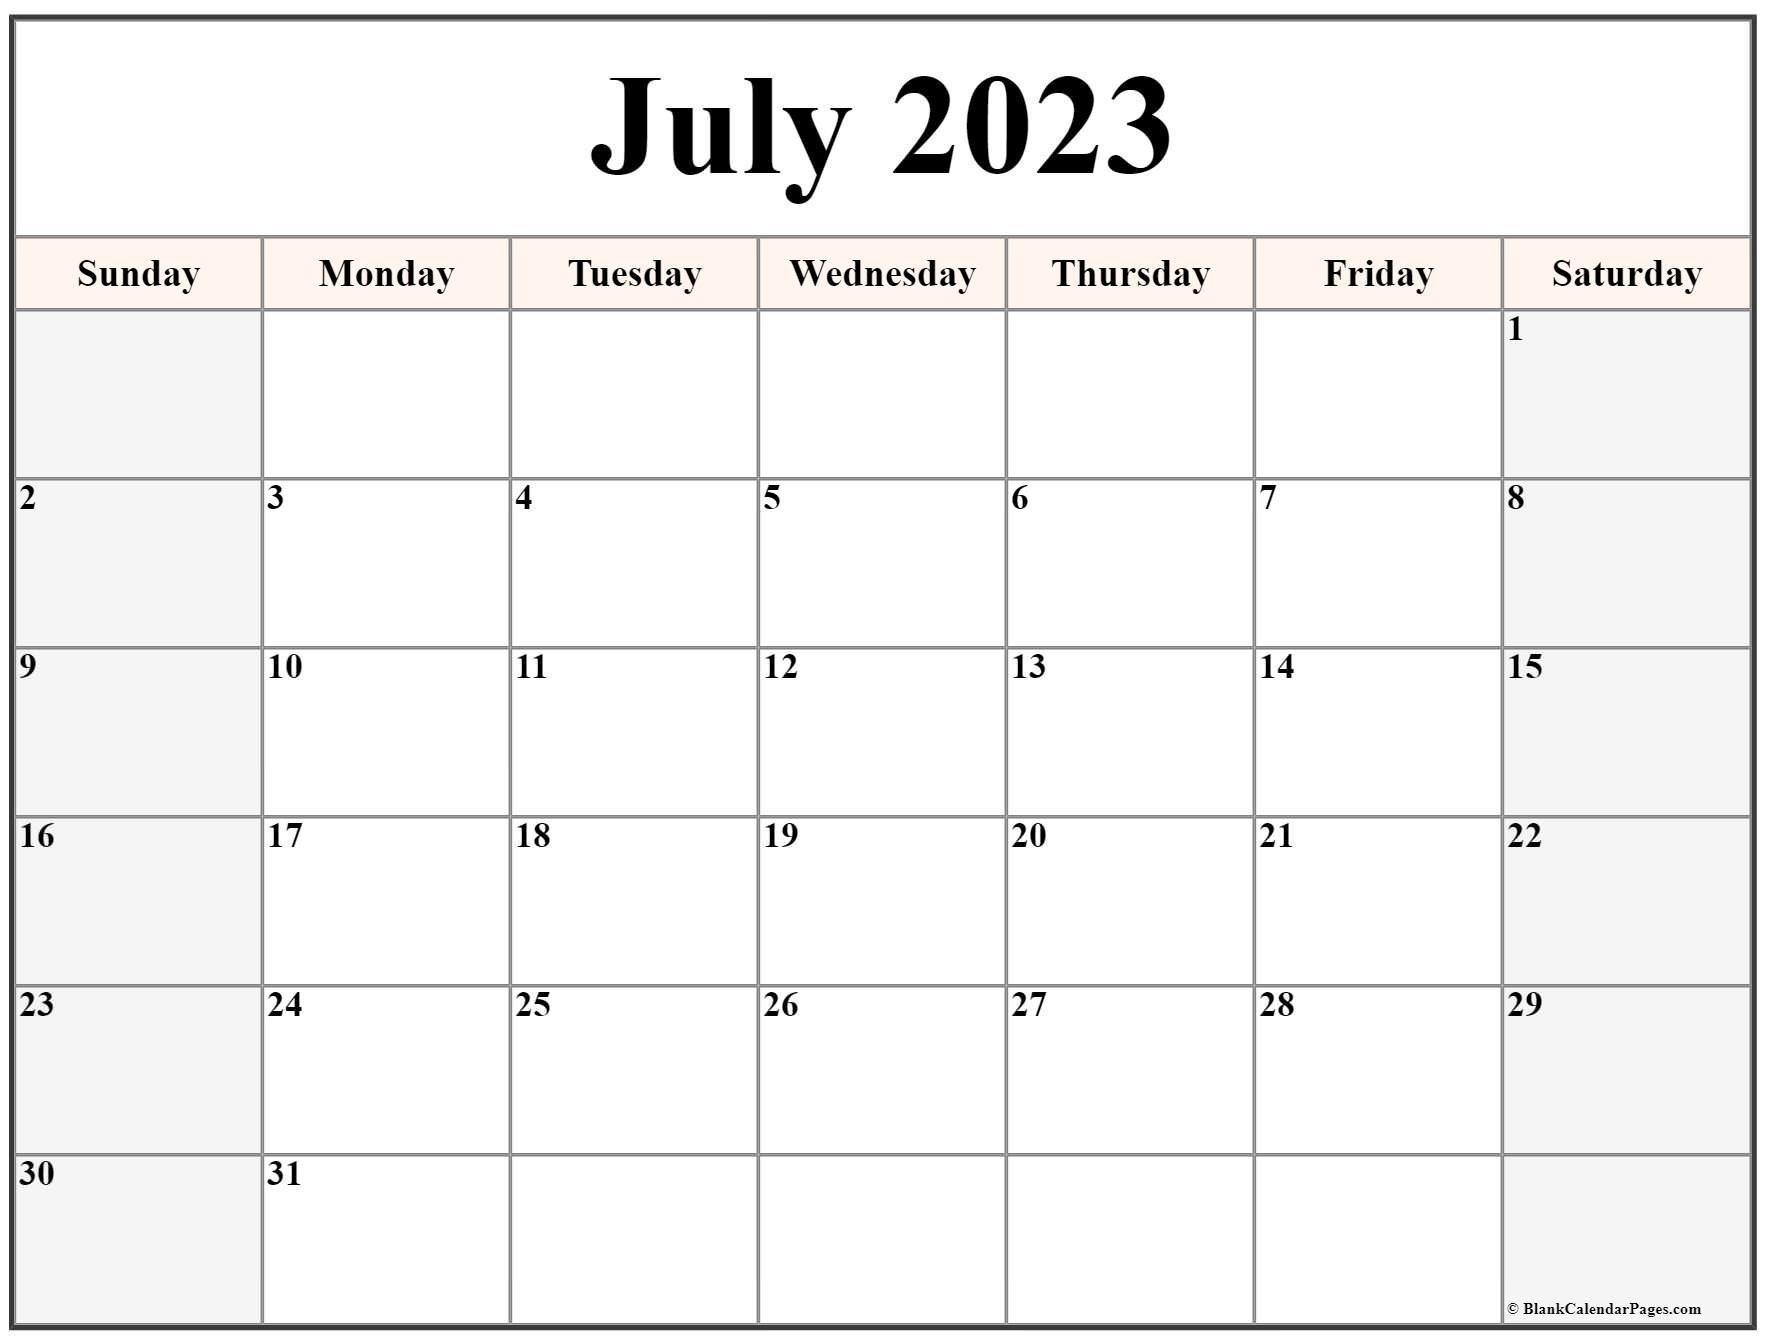 Summer 2023 Calendar Printable